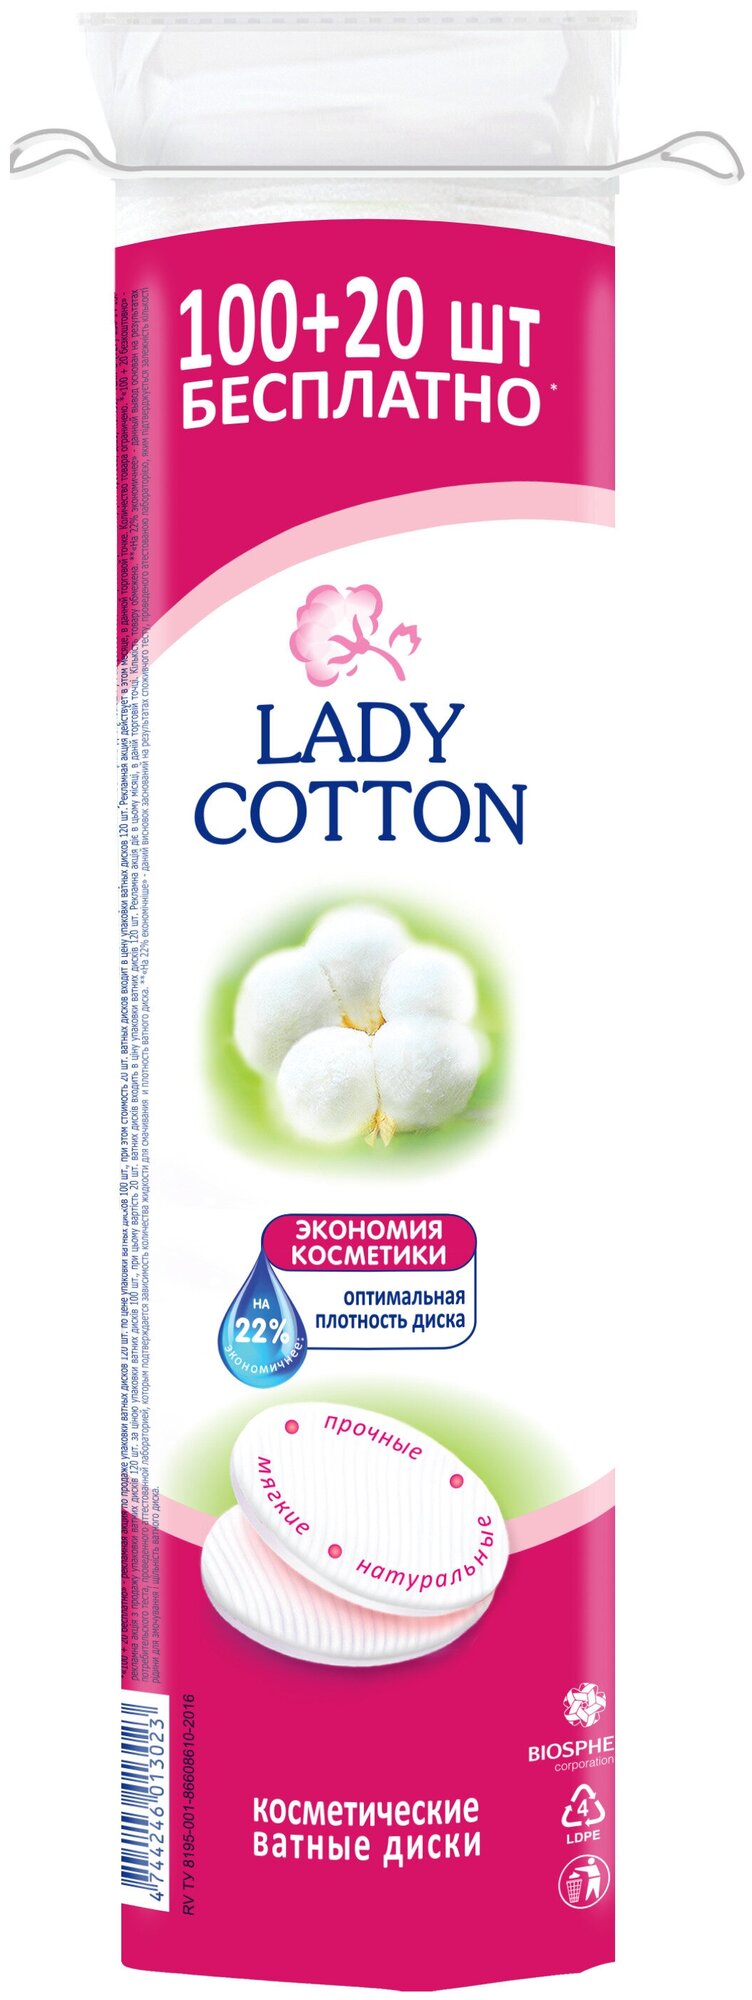   Lady Cotton 100 + 20  